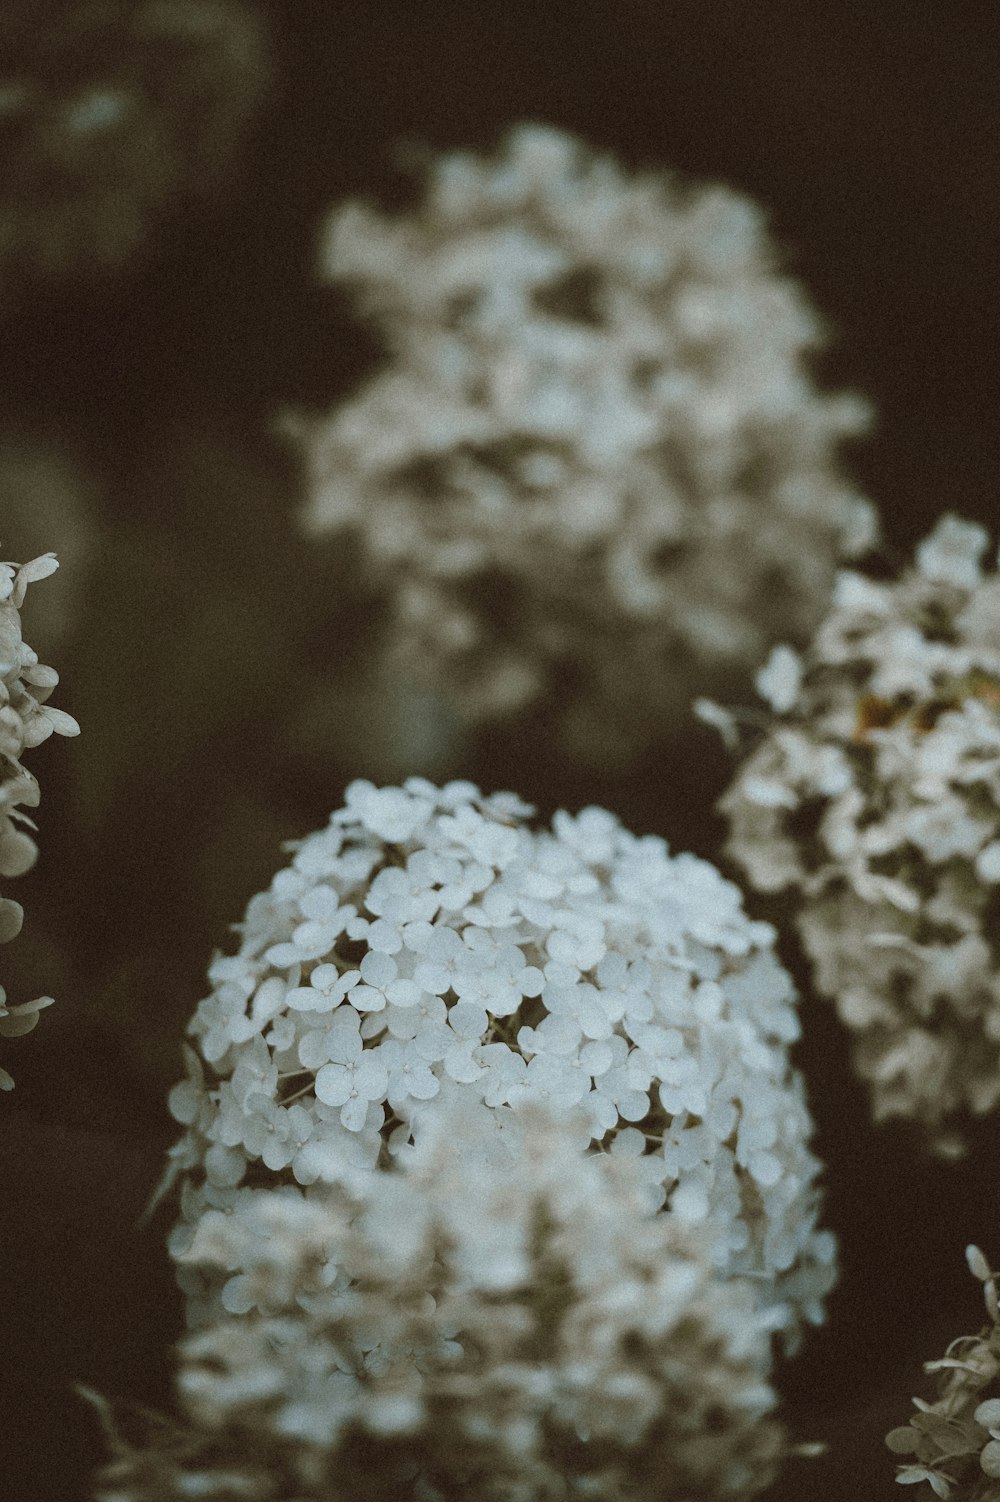 foto ravvicinata di fiori dai petali bianchi